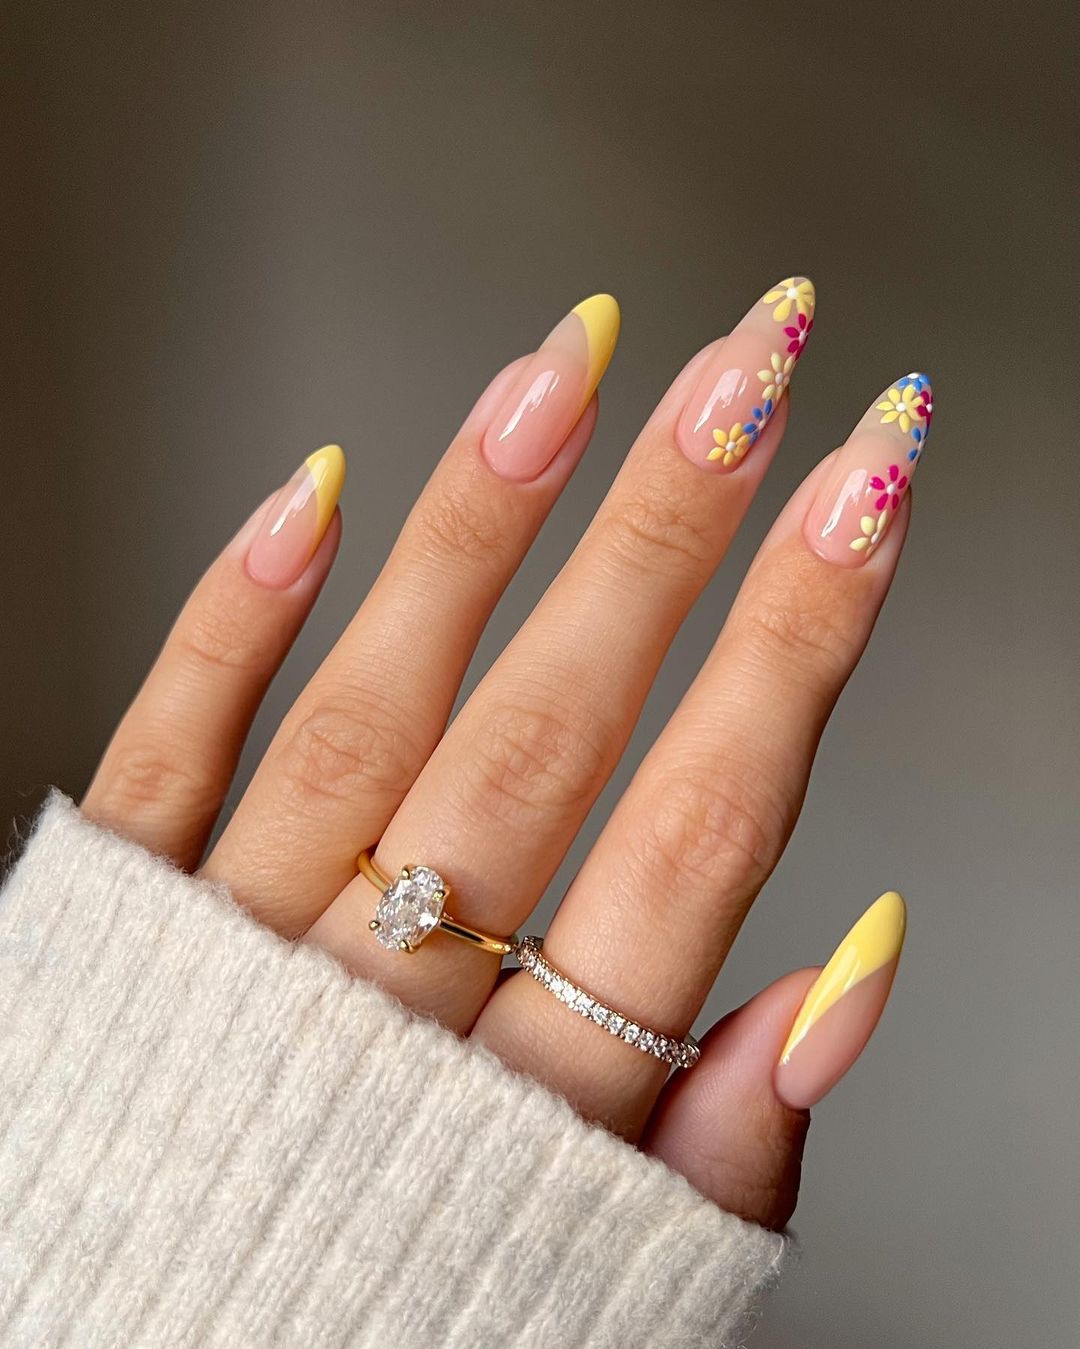 tiffanyabbigailebeauty Tiffany Minifie nail art design